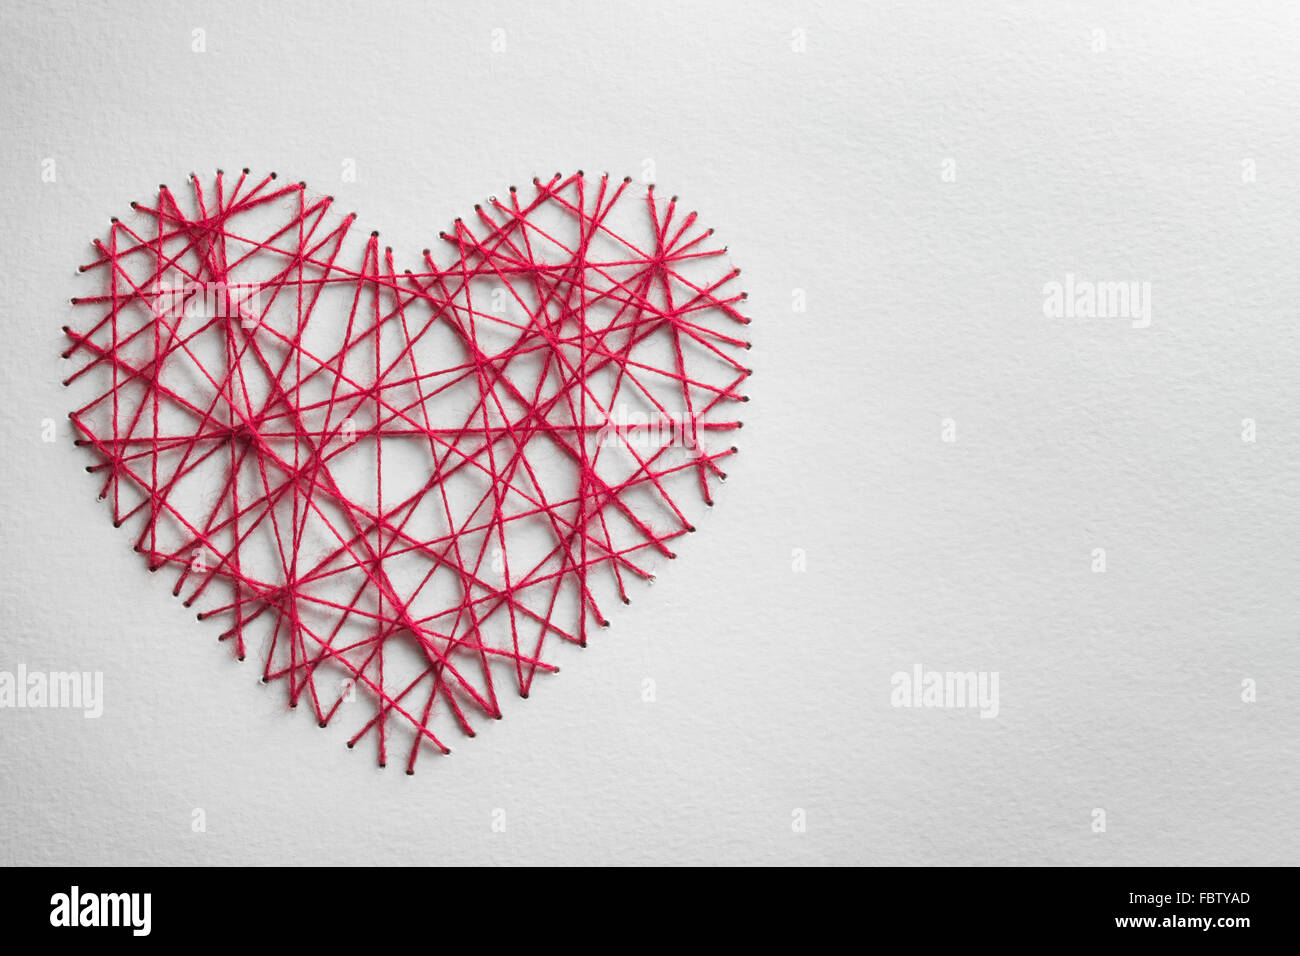 Corazón rojo de lana,San Valentín concepto. Foto de stock